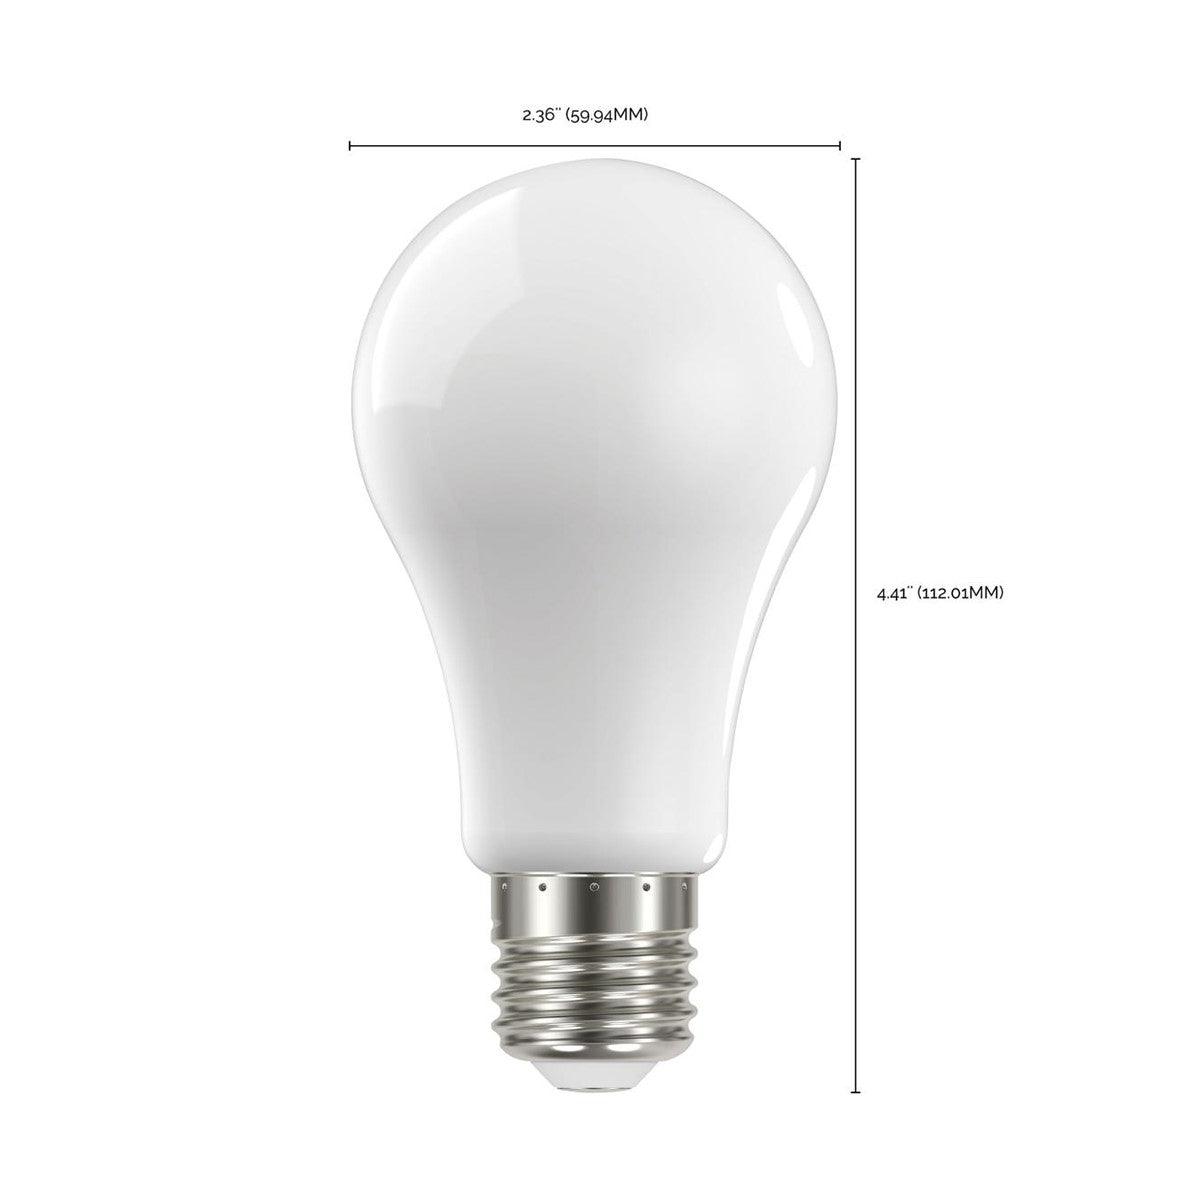 A19 LED Bulb, 100W Equivalent, 14 Watt, 1500 Lumens, 3000K, E26 Medium Base, Frosted Finish, Pack Of 4